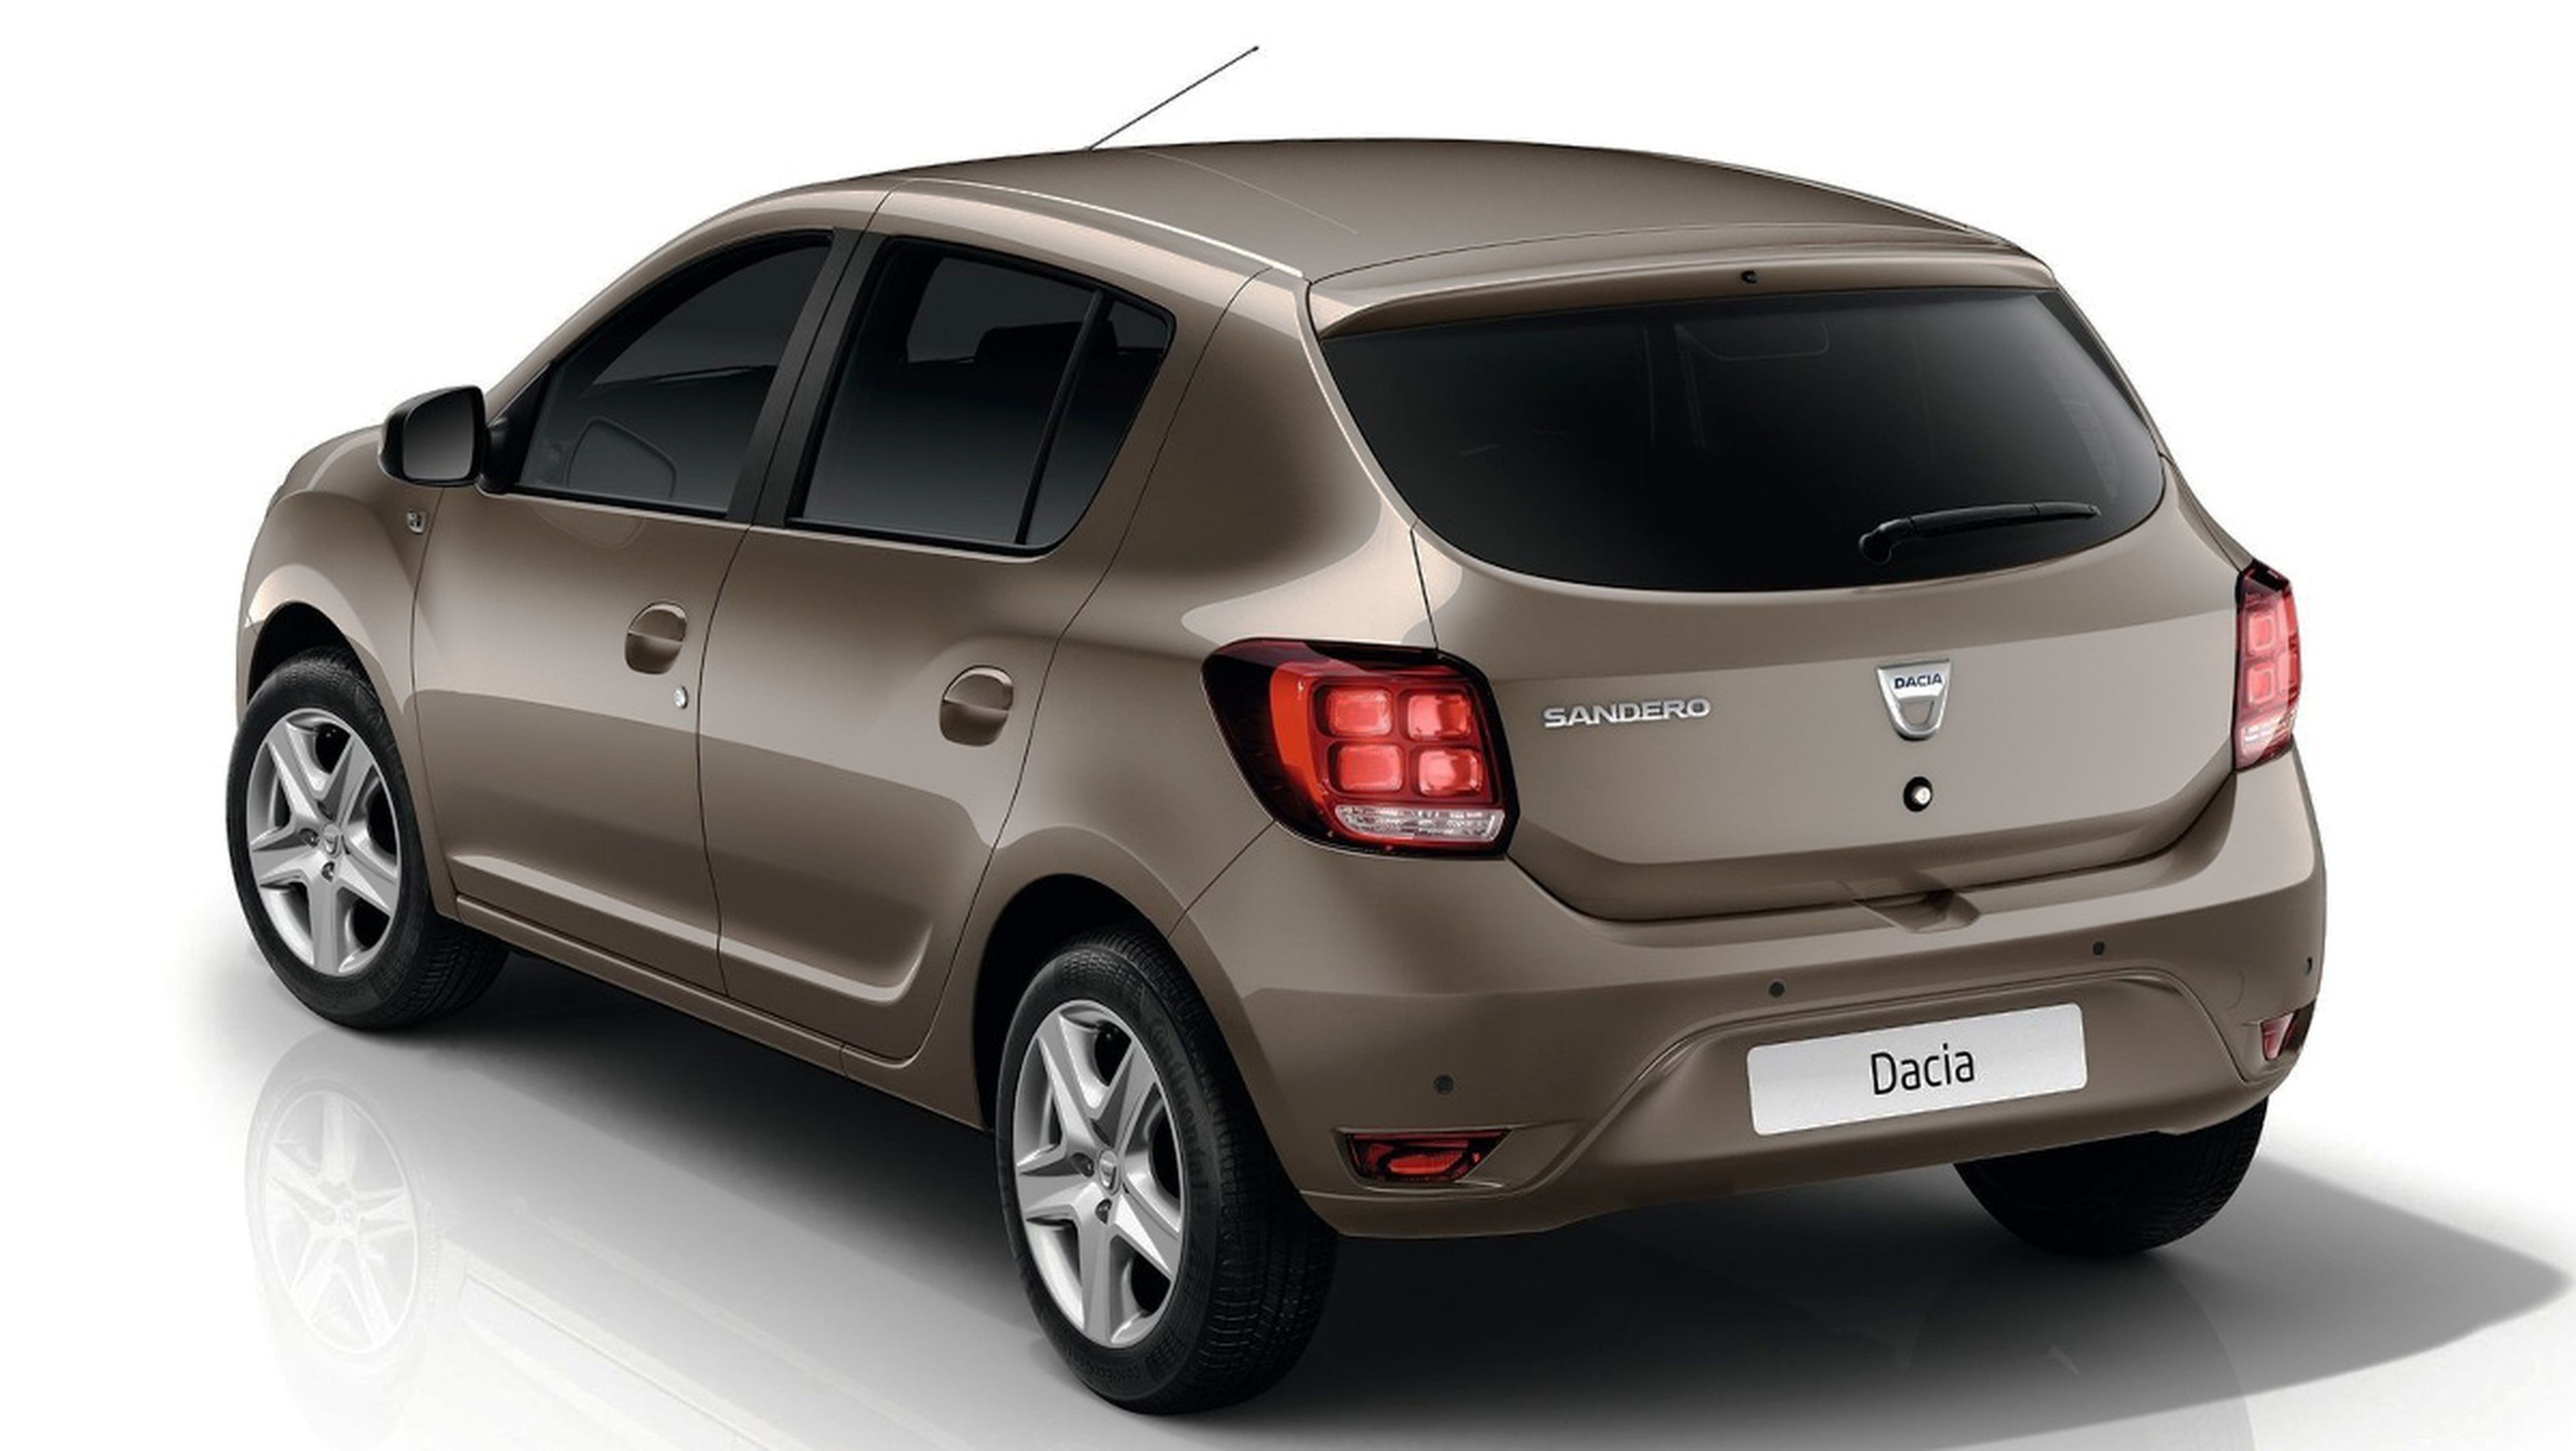 Coches nuevos por 6.000 euros - Dacia Sandero